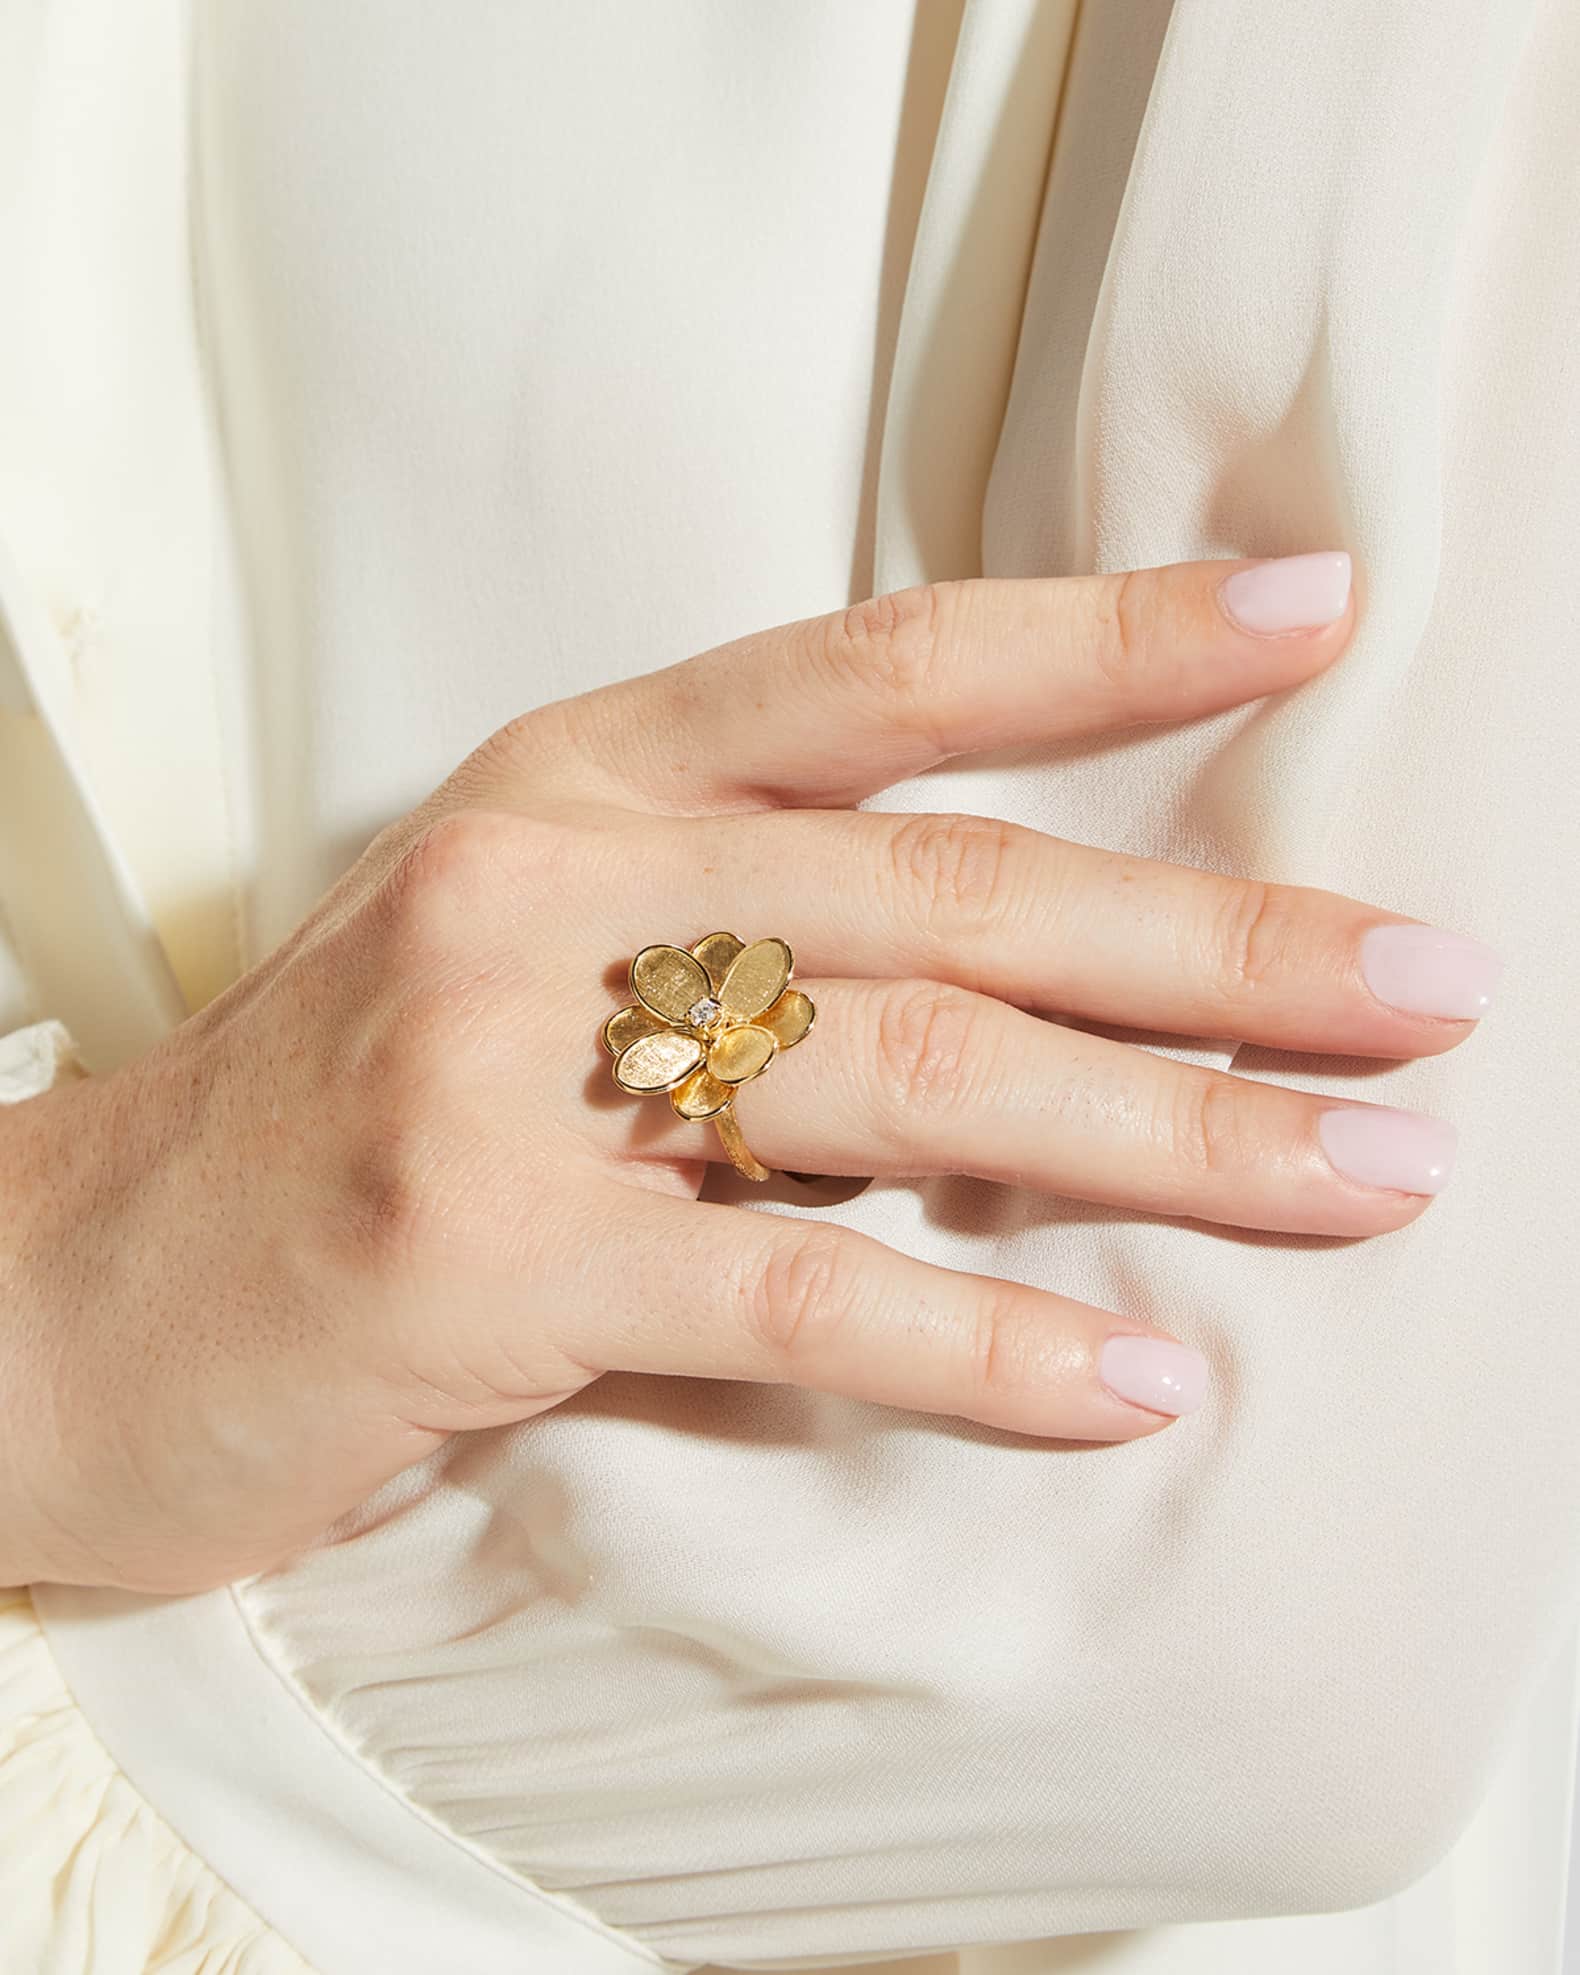 Marco Bicego Petali 18K Gold Pave Diamond Flower Ring